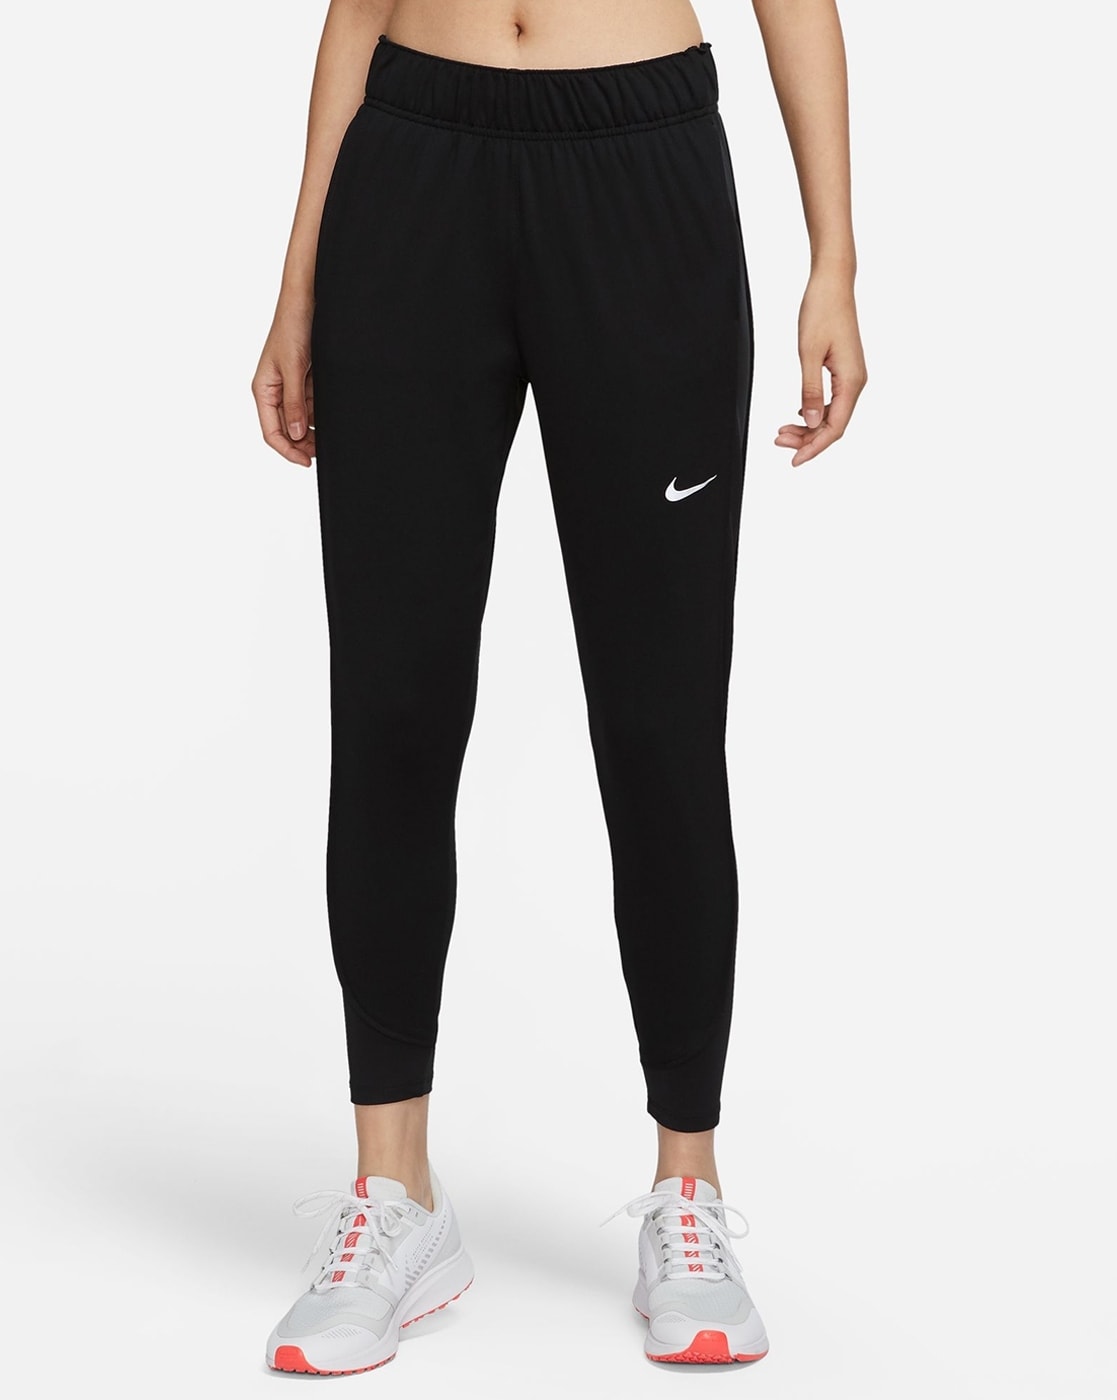 Nike Plus Size Air Hi-Rise Pants | Pants for women, Foot locker, Pants